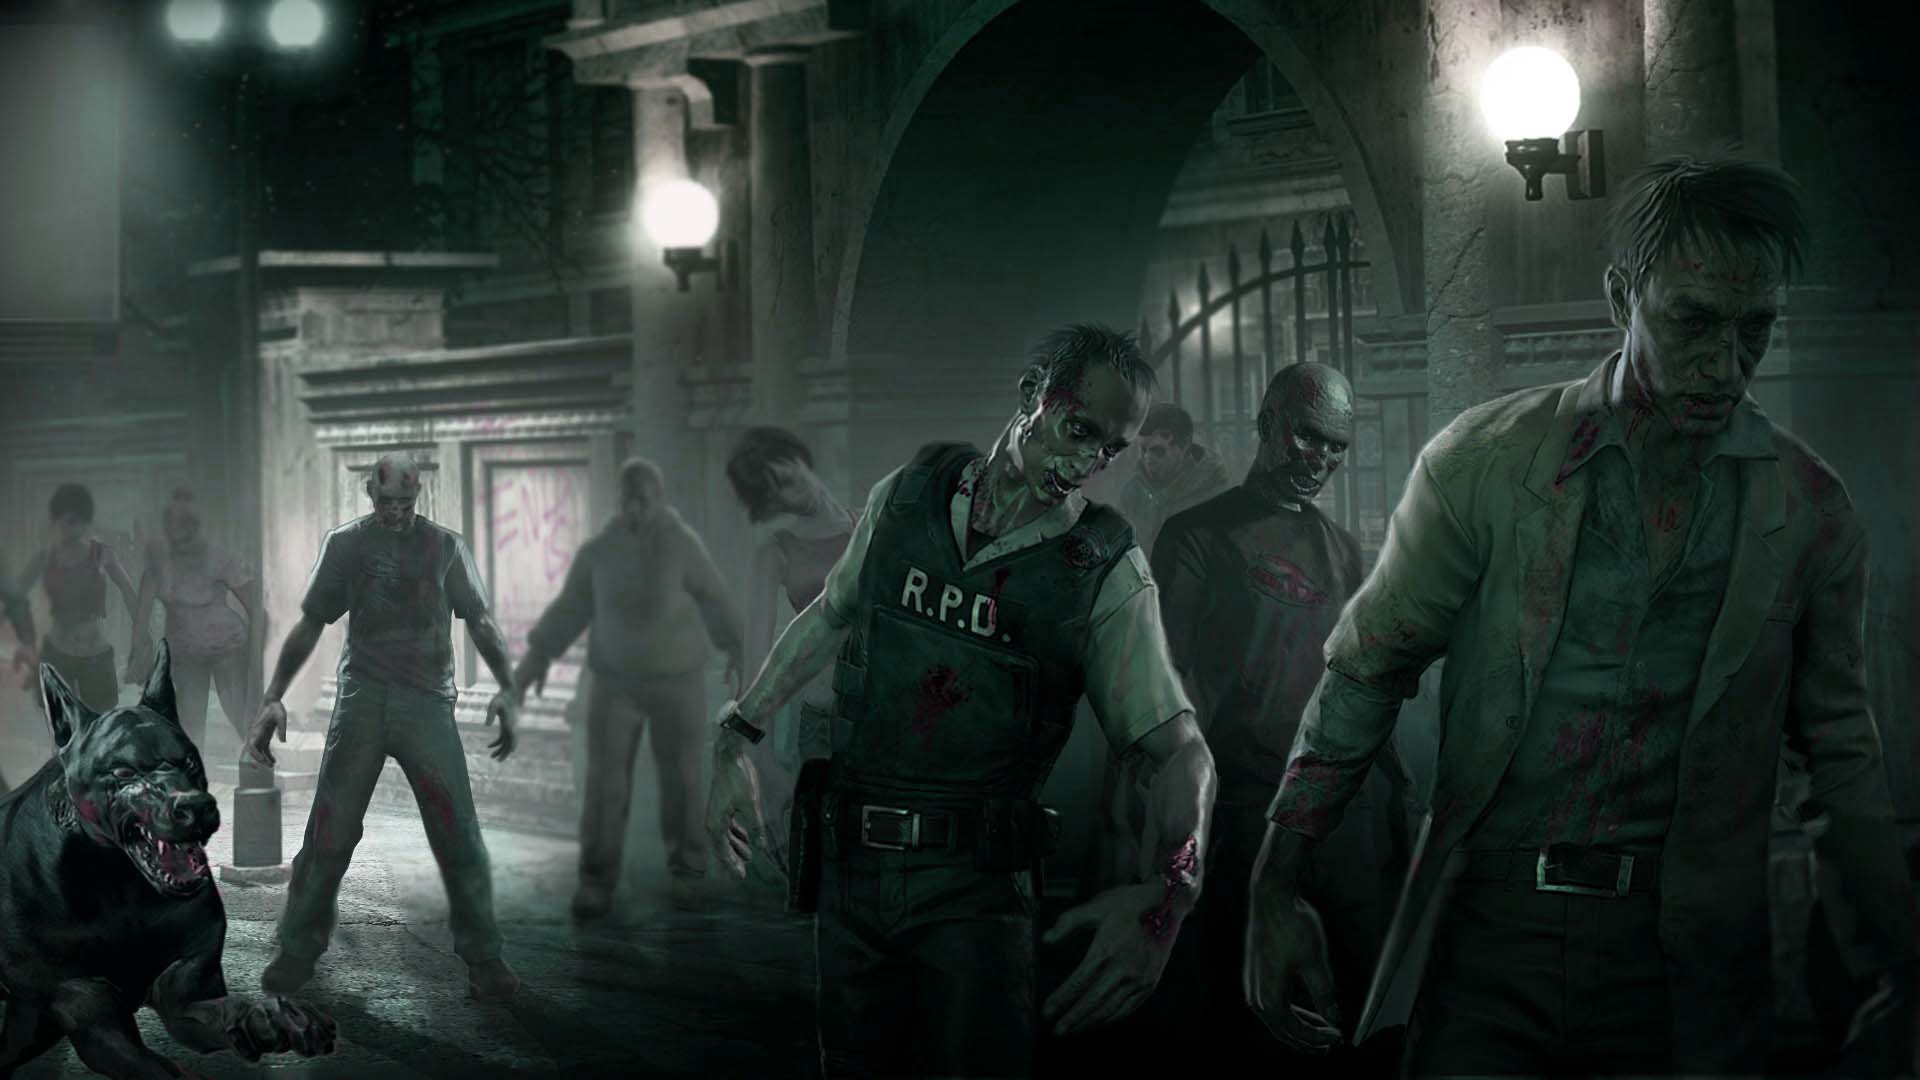 Dangerous zombie wallpaper Free download Get Latest Backgrounds